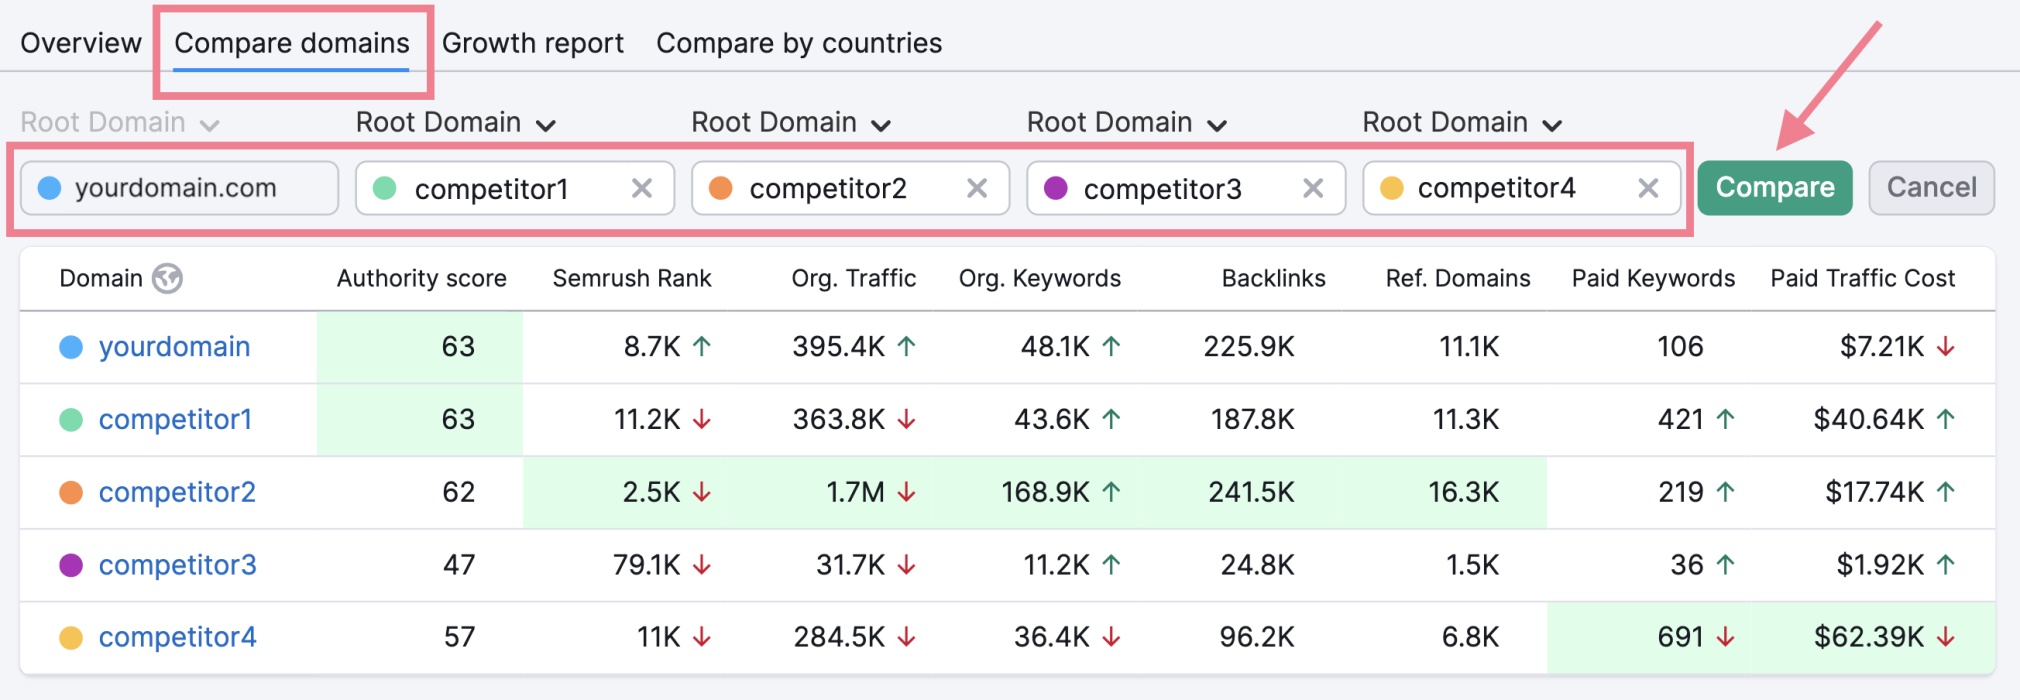 domain overview compare competitors